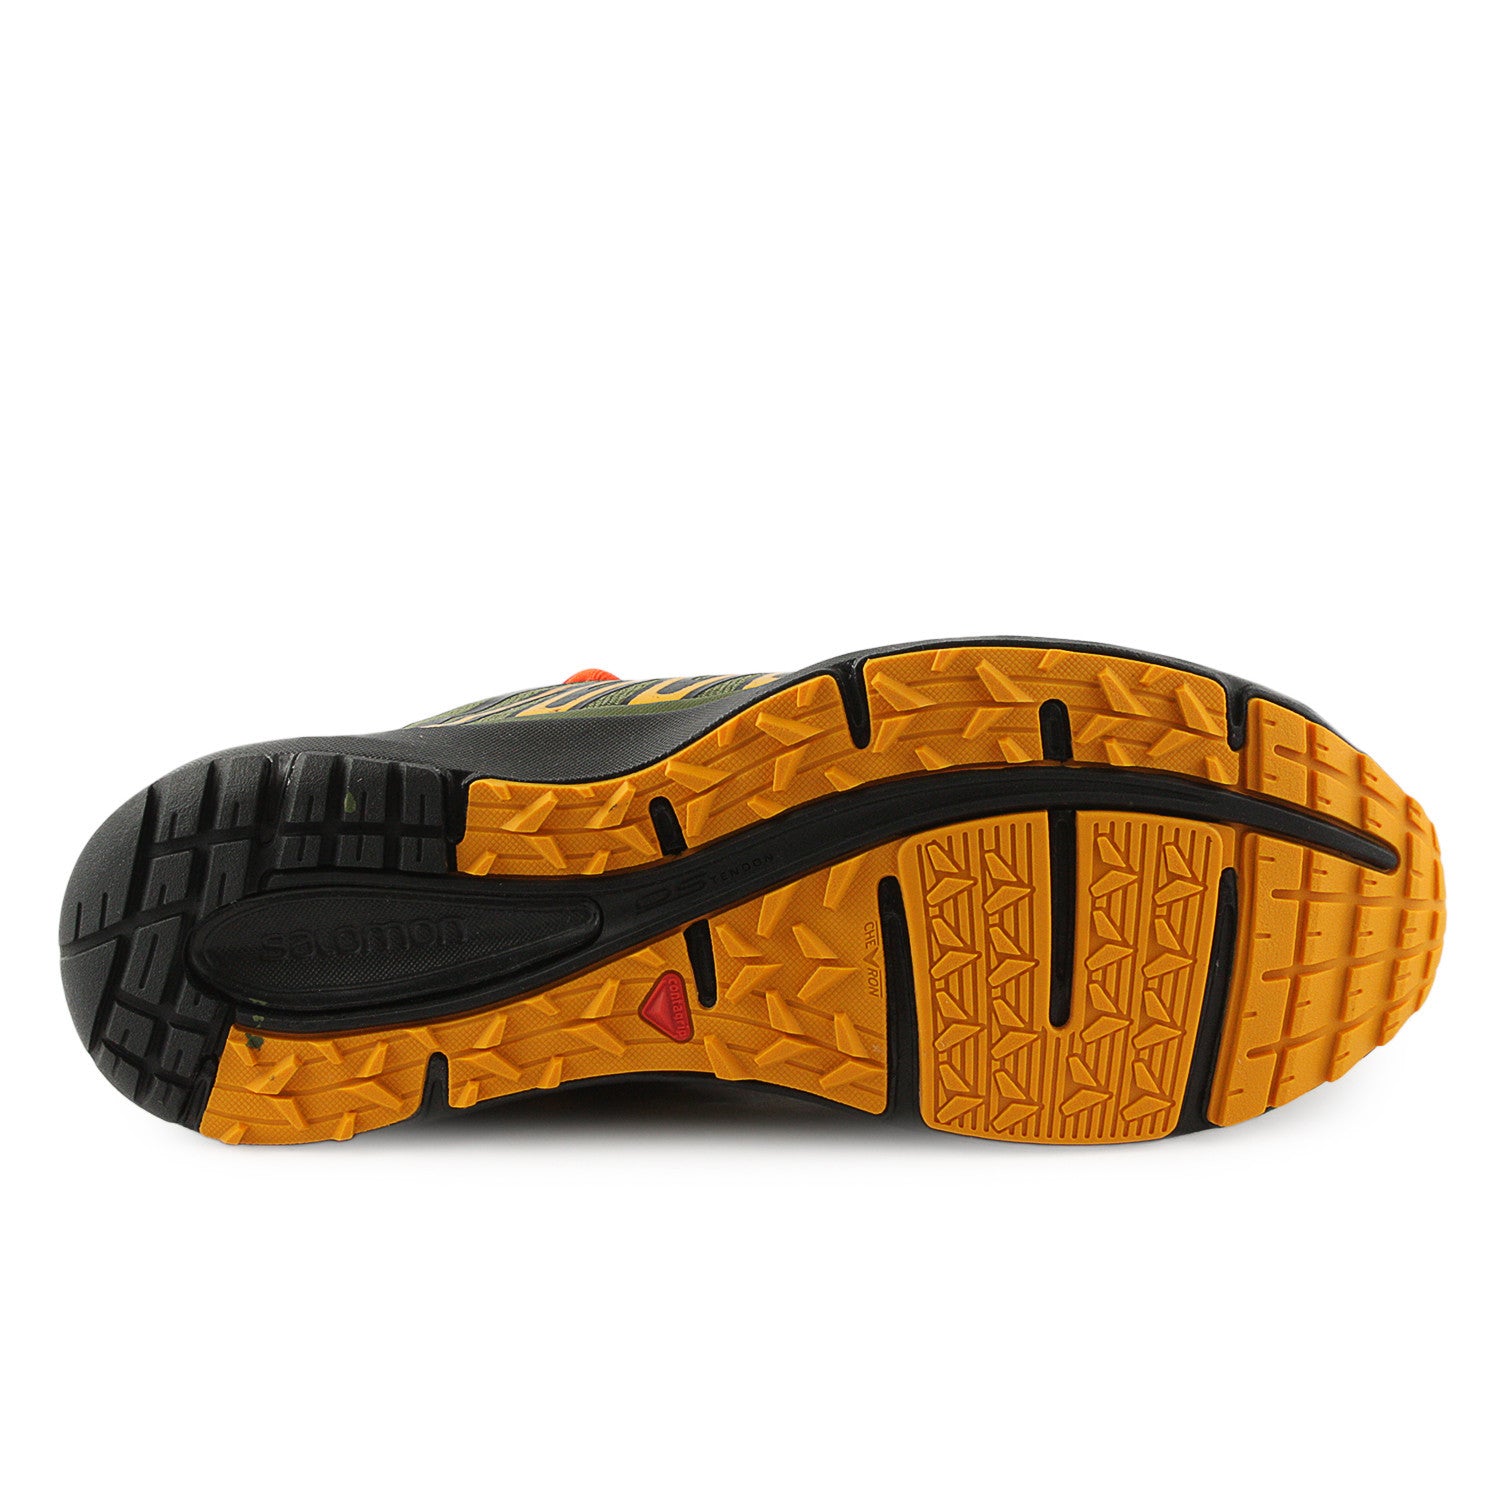 Salomon Trail Running Shoe Green/Black/Yellow (Mens) - Shoplifestyle